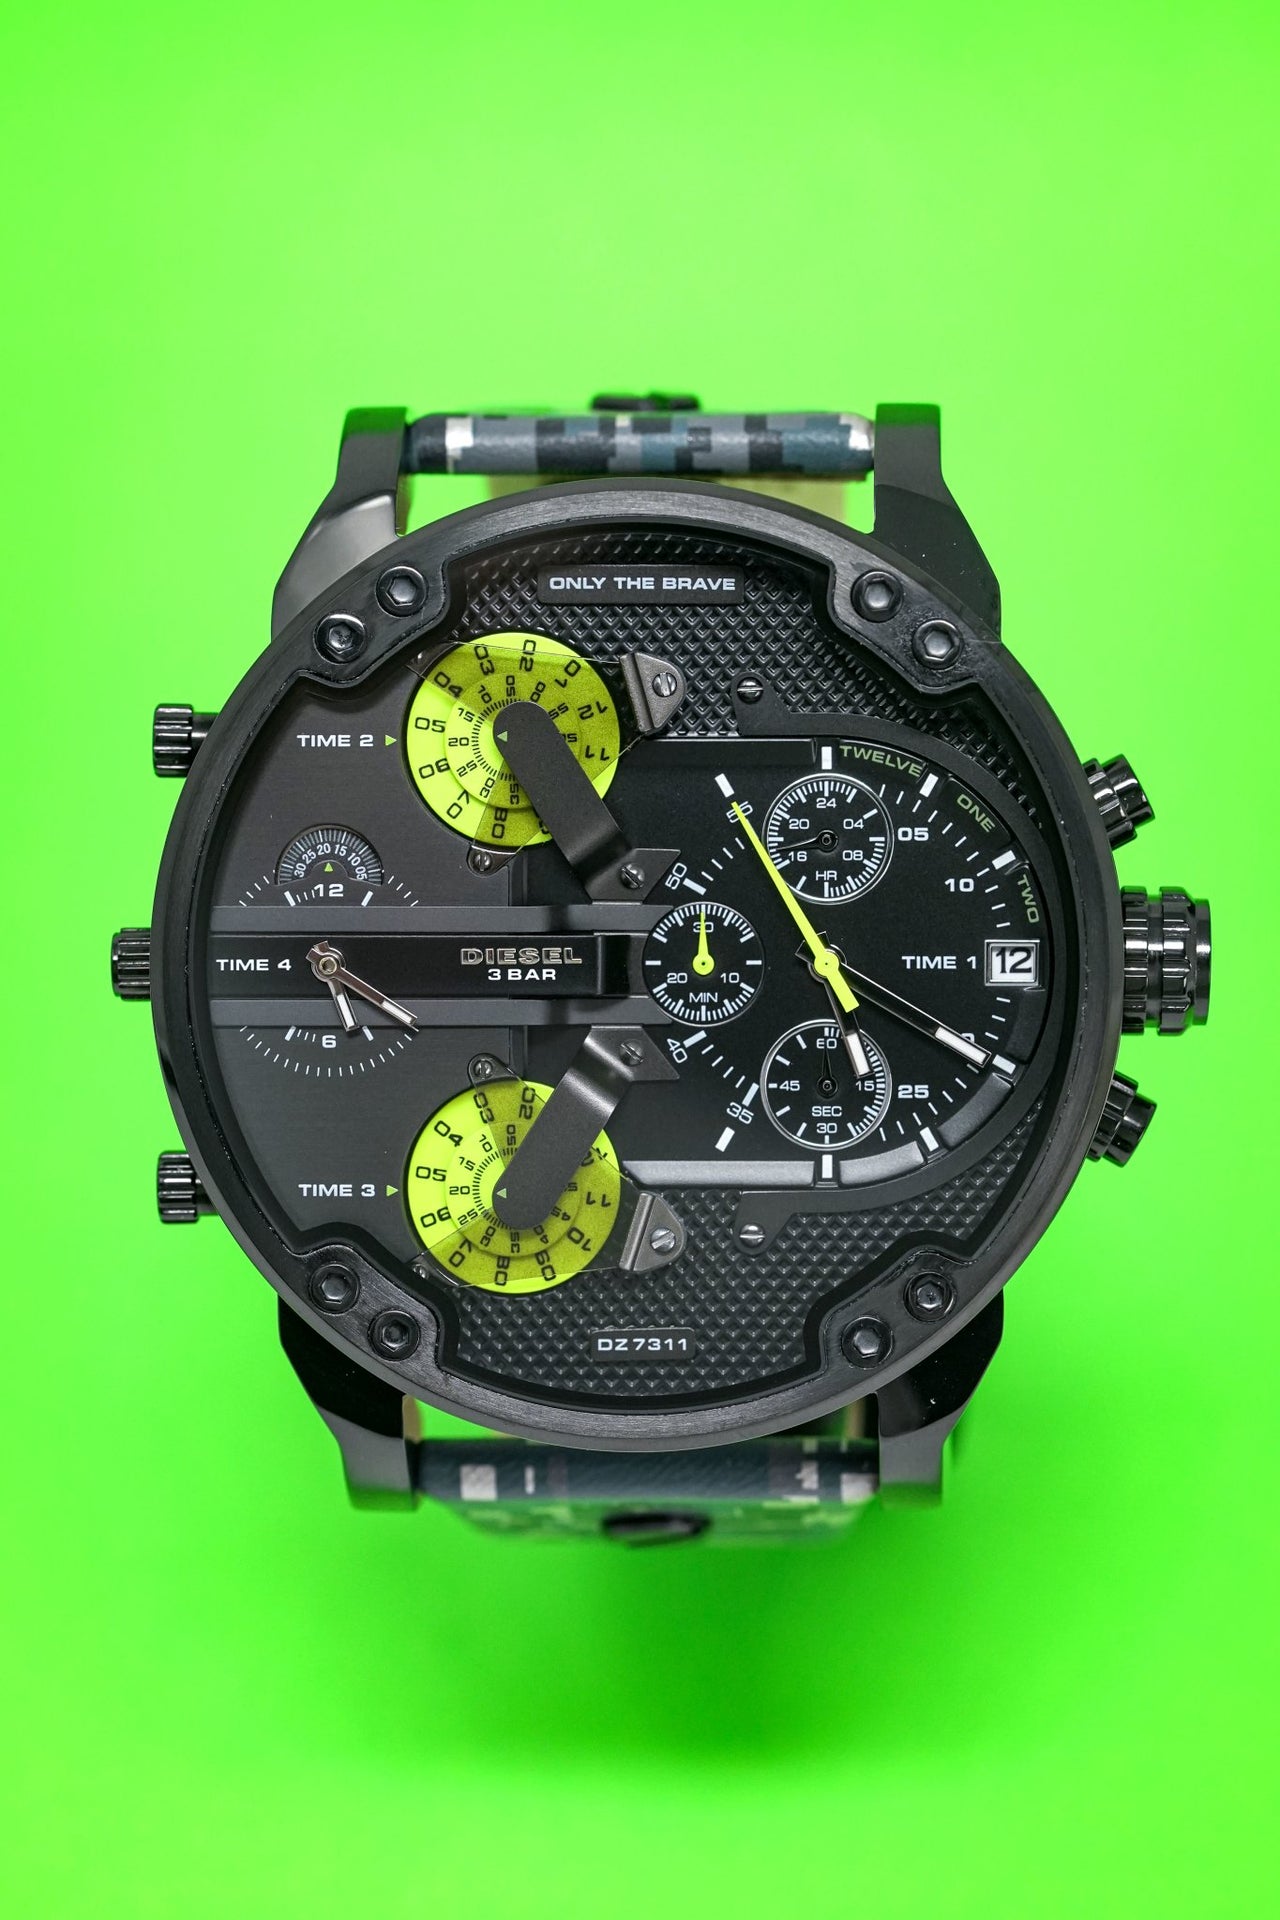 Diesel Men's Chronograph Watch Mr Daddy 2.0 Camouflage - Watches & Crystals